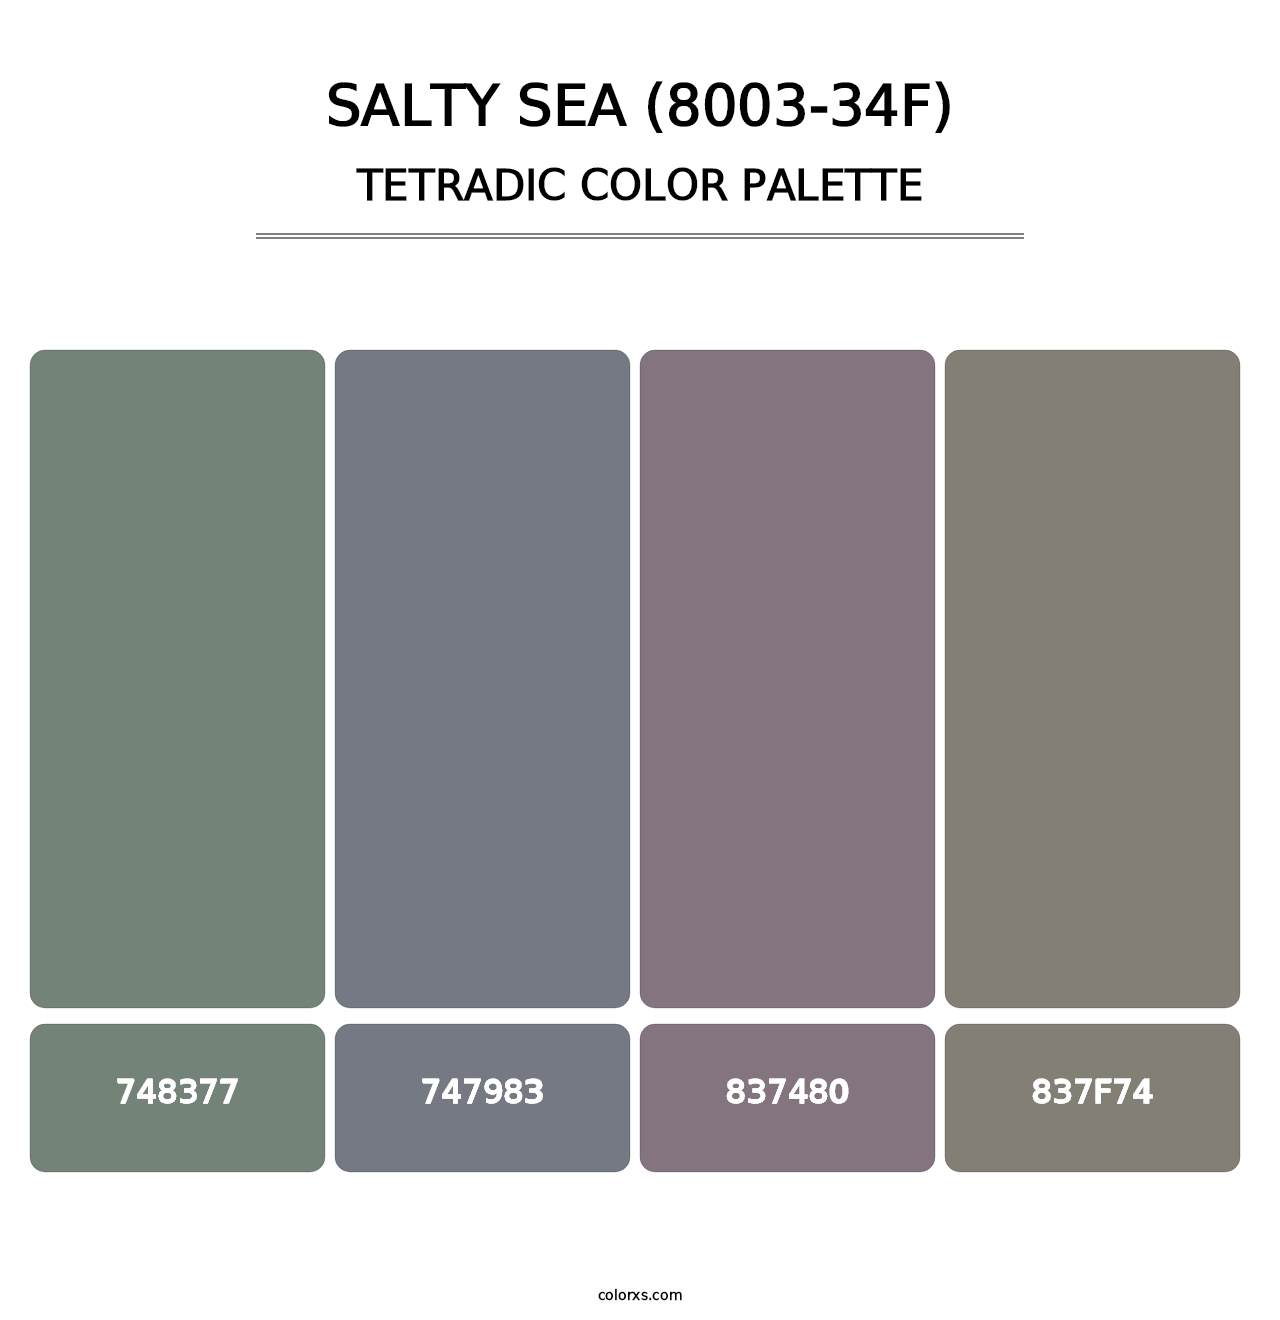 Salty Sea (8003-34F) - Tetradic Color Palette